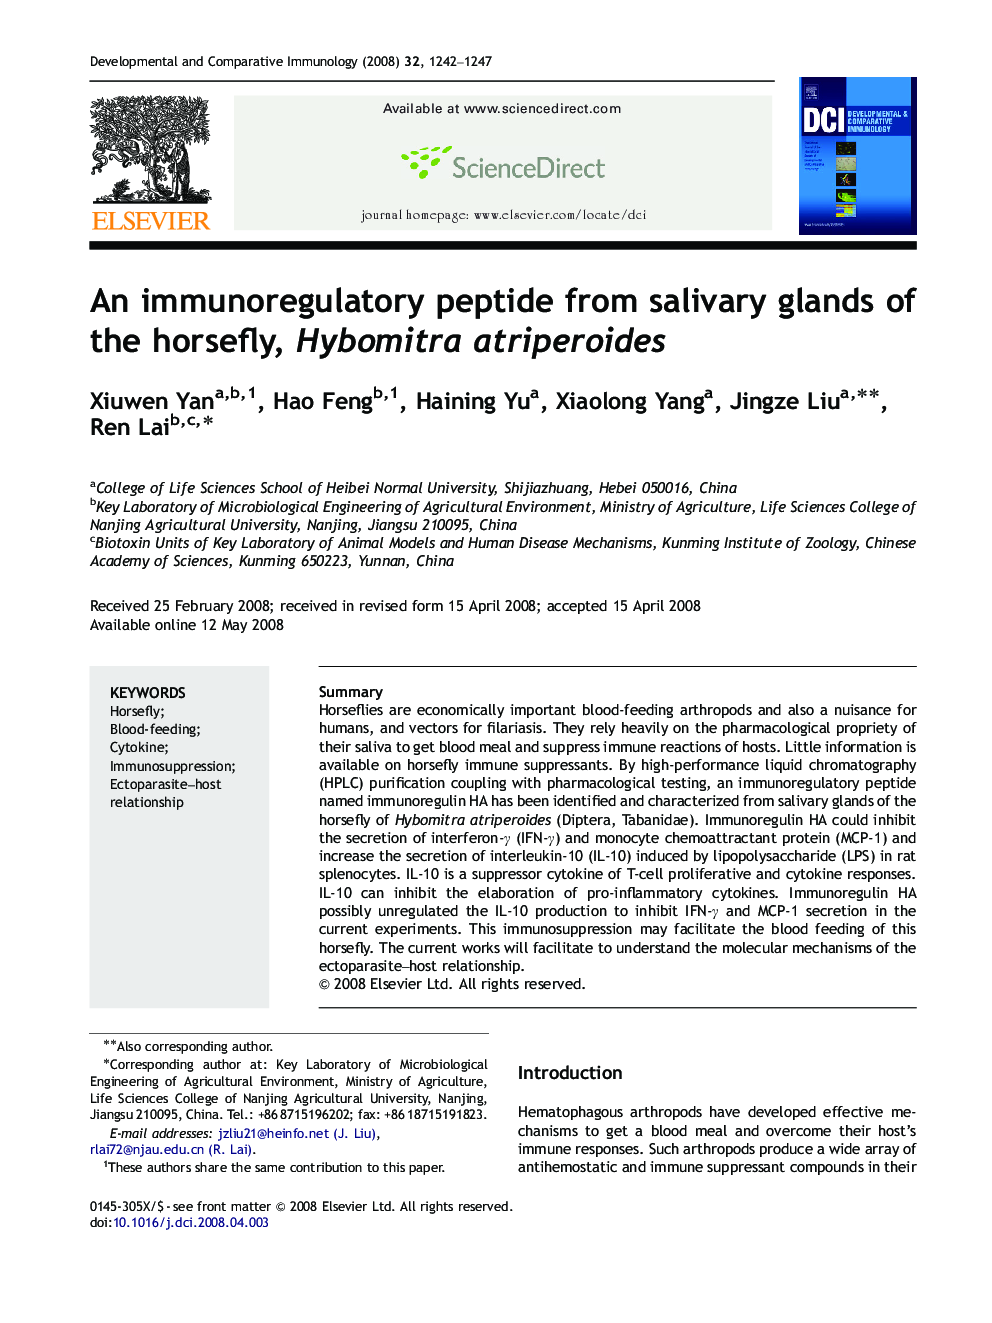 An immunoregulatory peptide from salivary glands of the horsefly, Hybomitra atriperoides